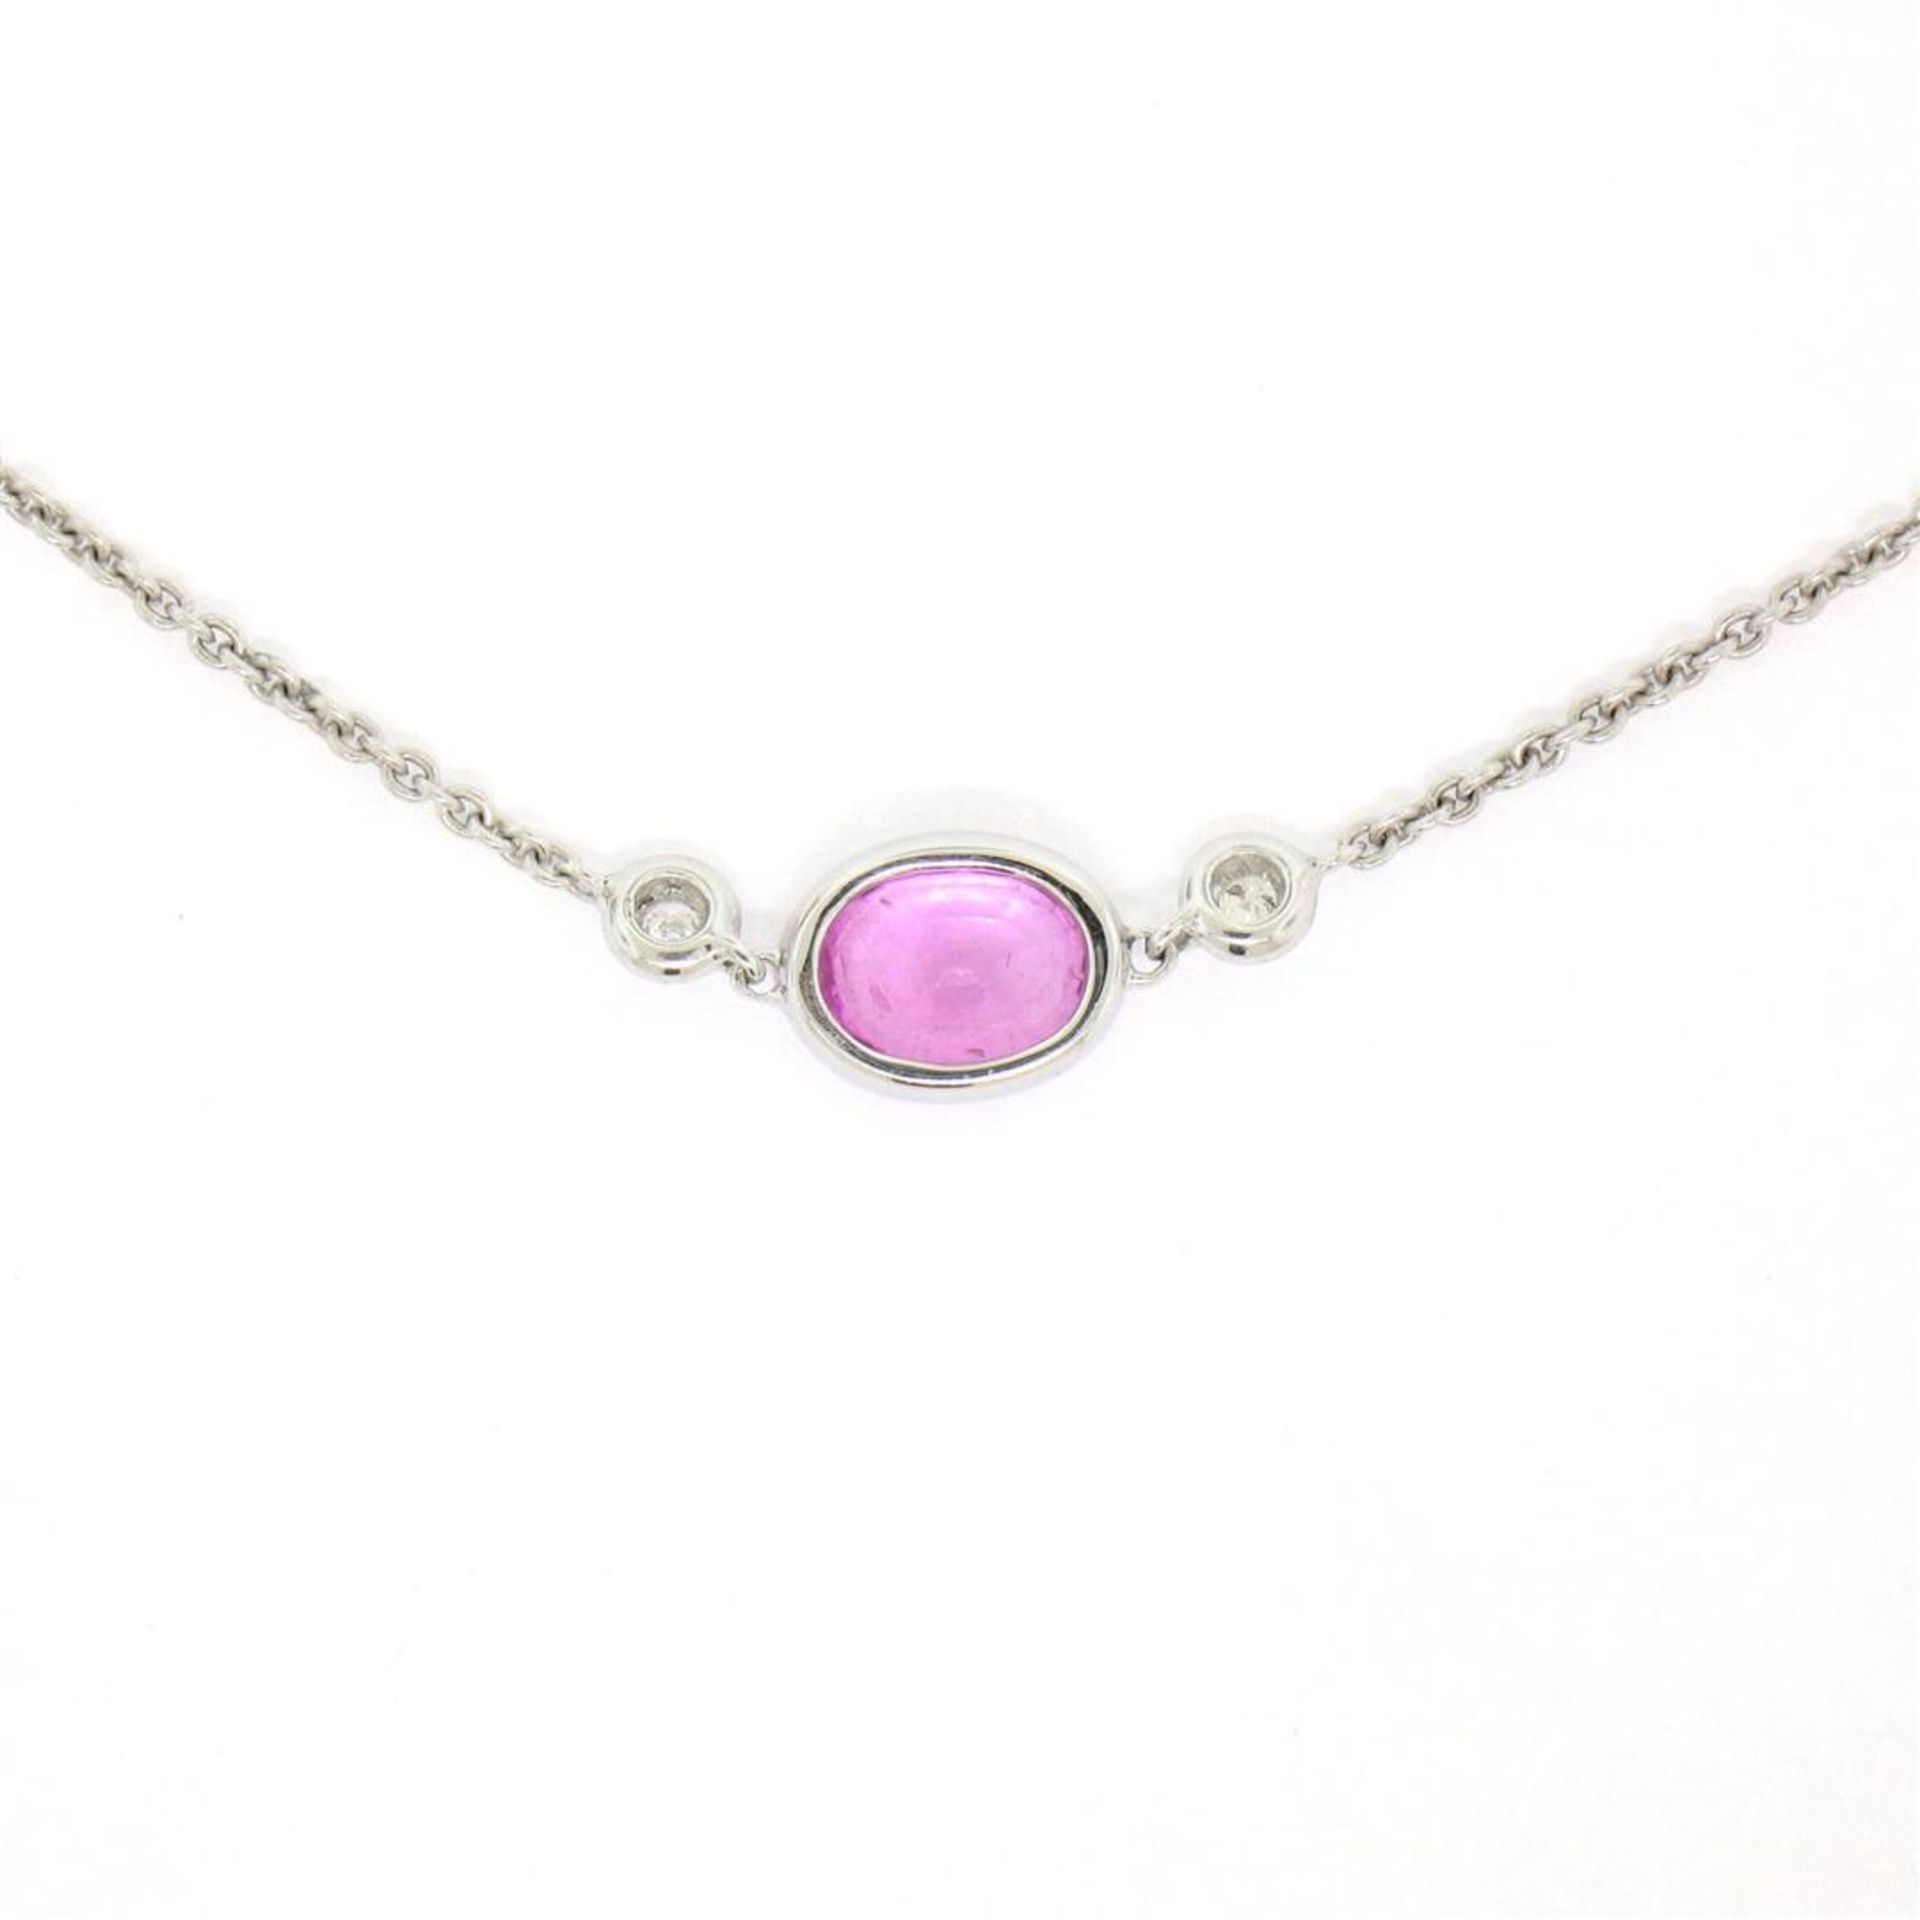 18K White Gold 16" 1.37 ctw GIA Pink Sapphire & Diamond Pendant Necklace - Image 7 of 9